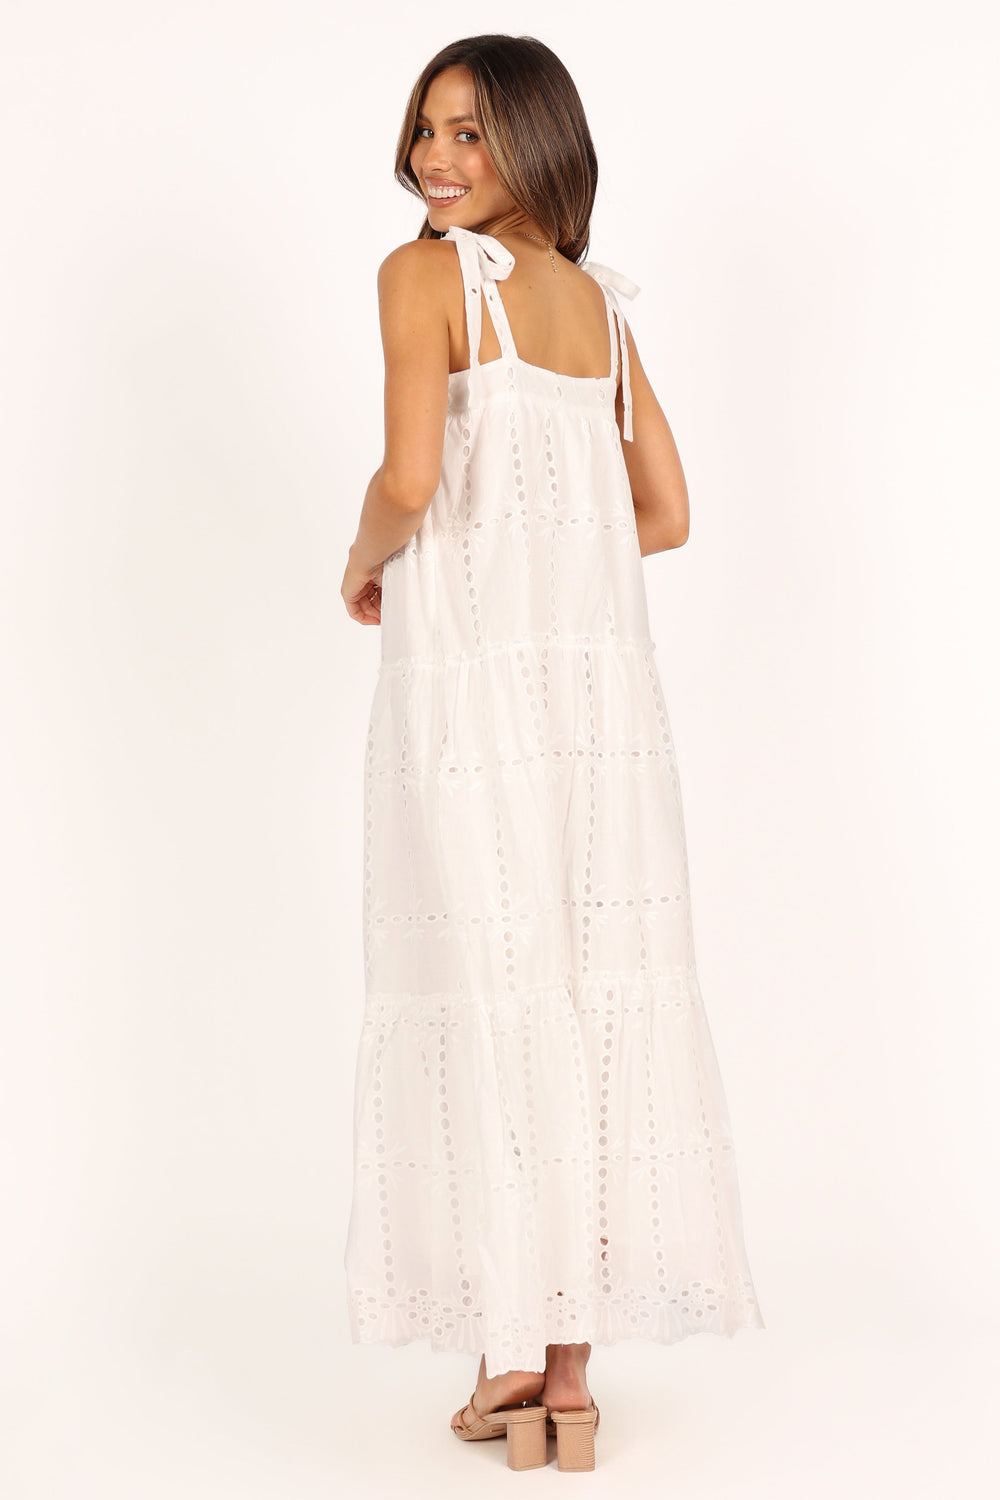 Petal and Pup USA DRESSES Danna Dress - White